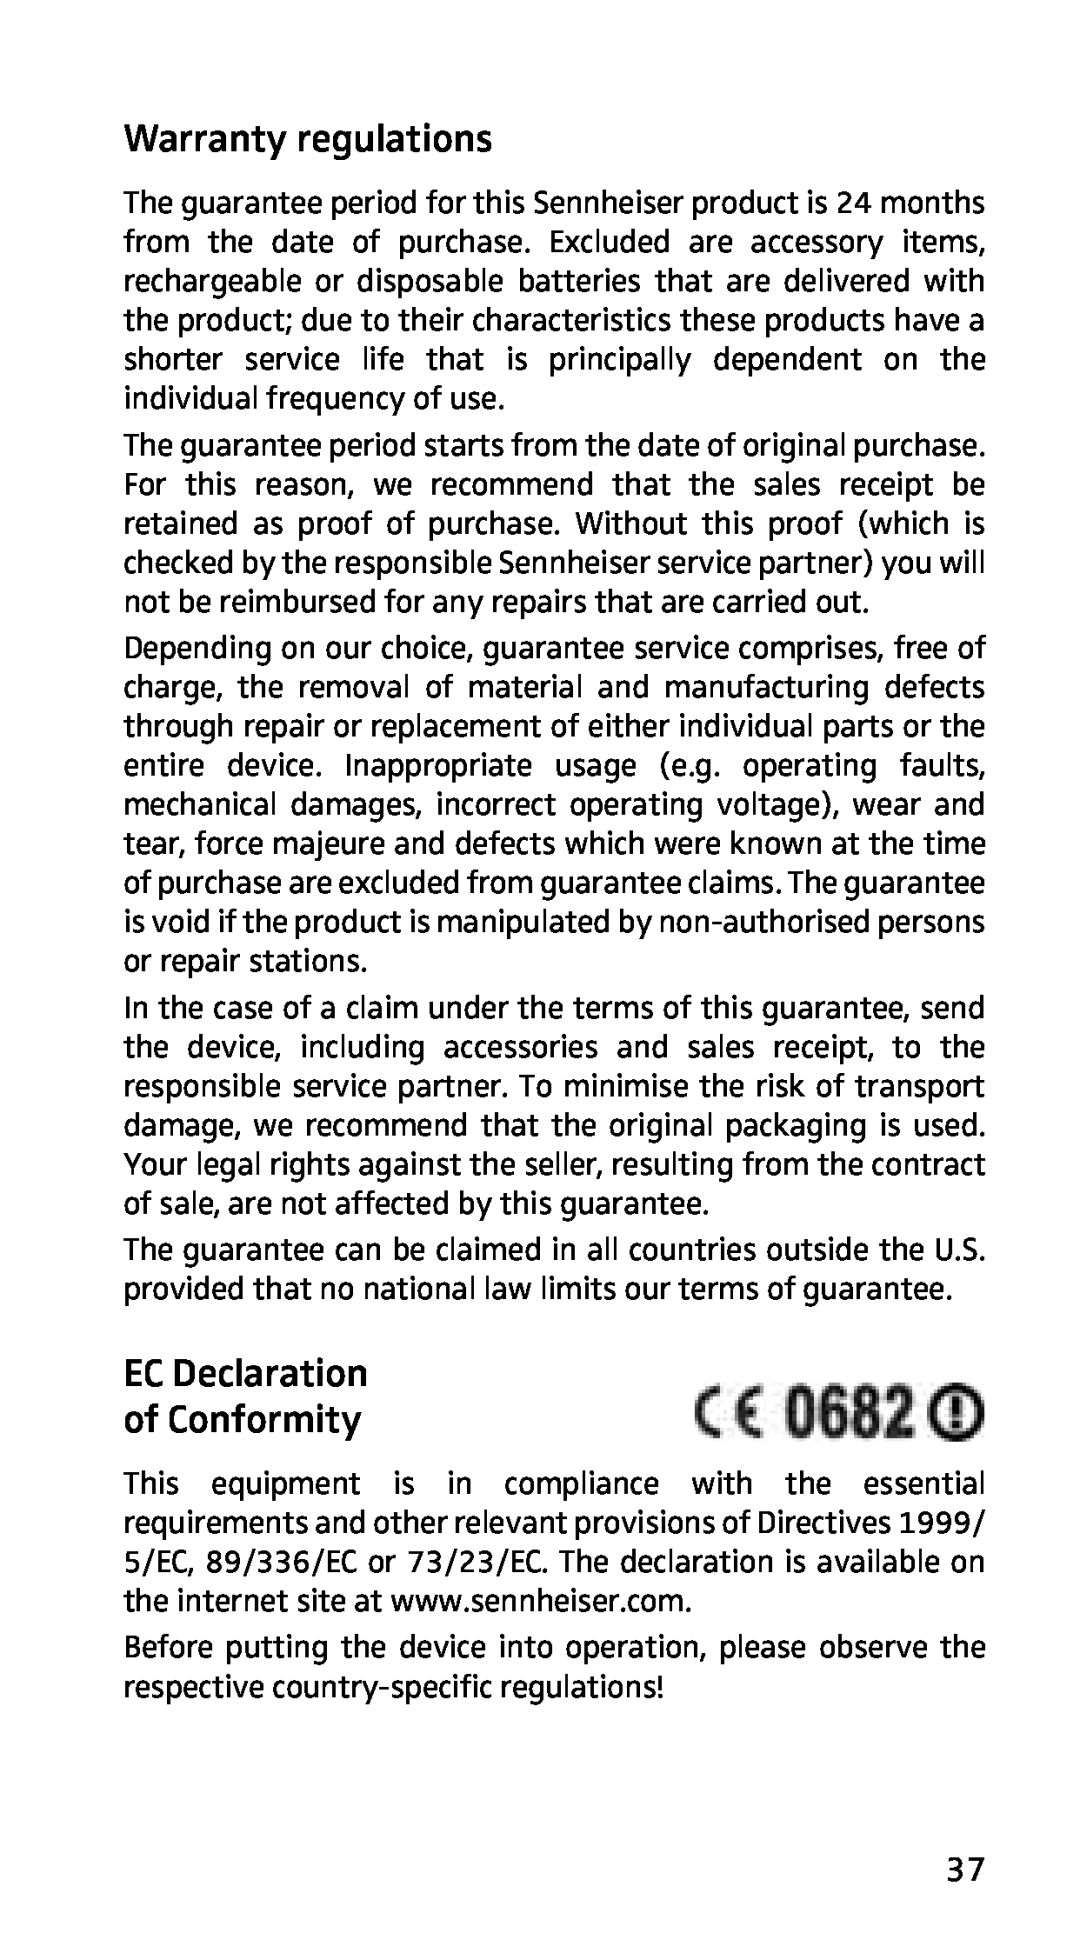 Sennheiser EK3253 manual Warranty regulations, EC Declaration of Conformity 